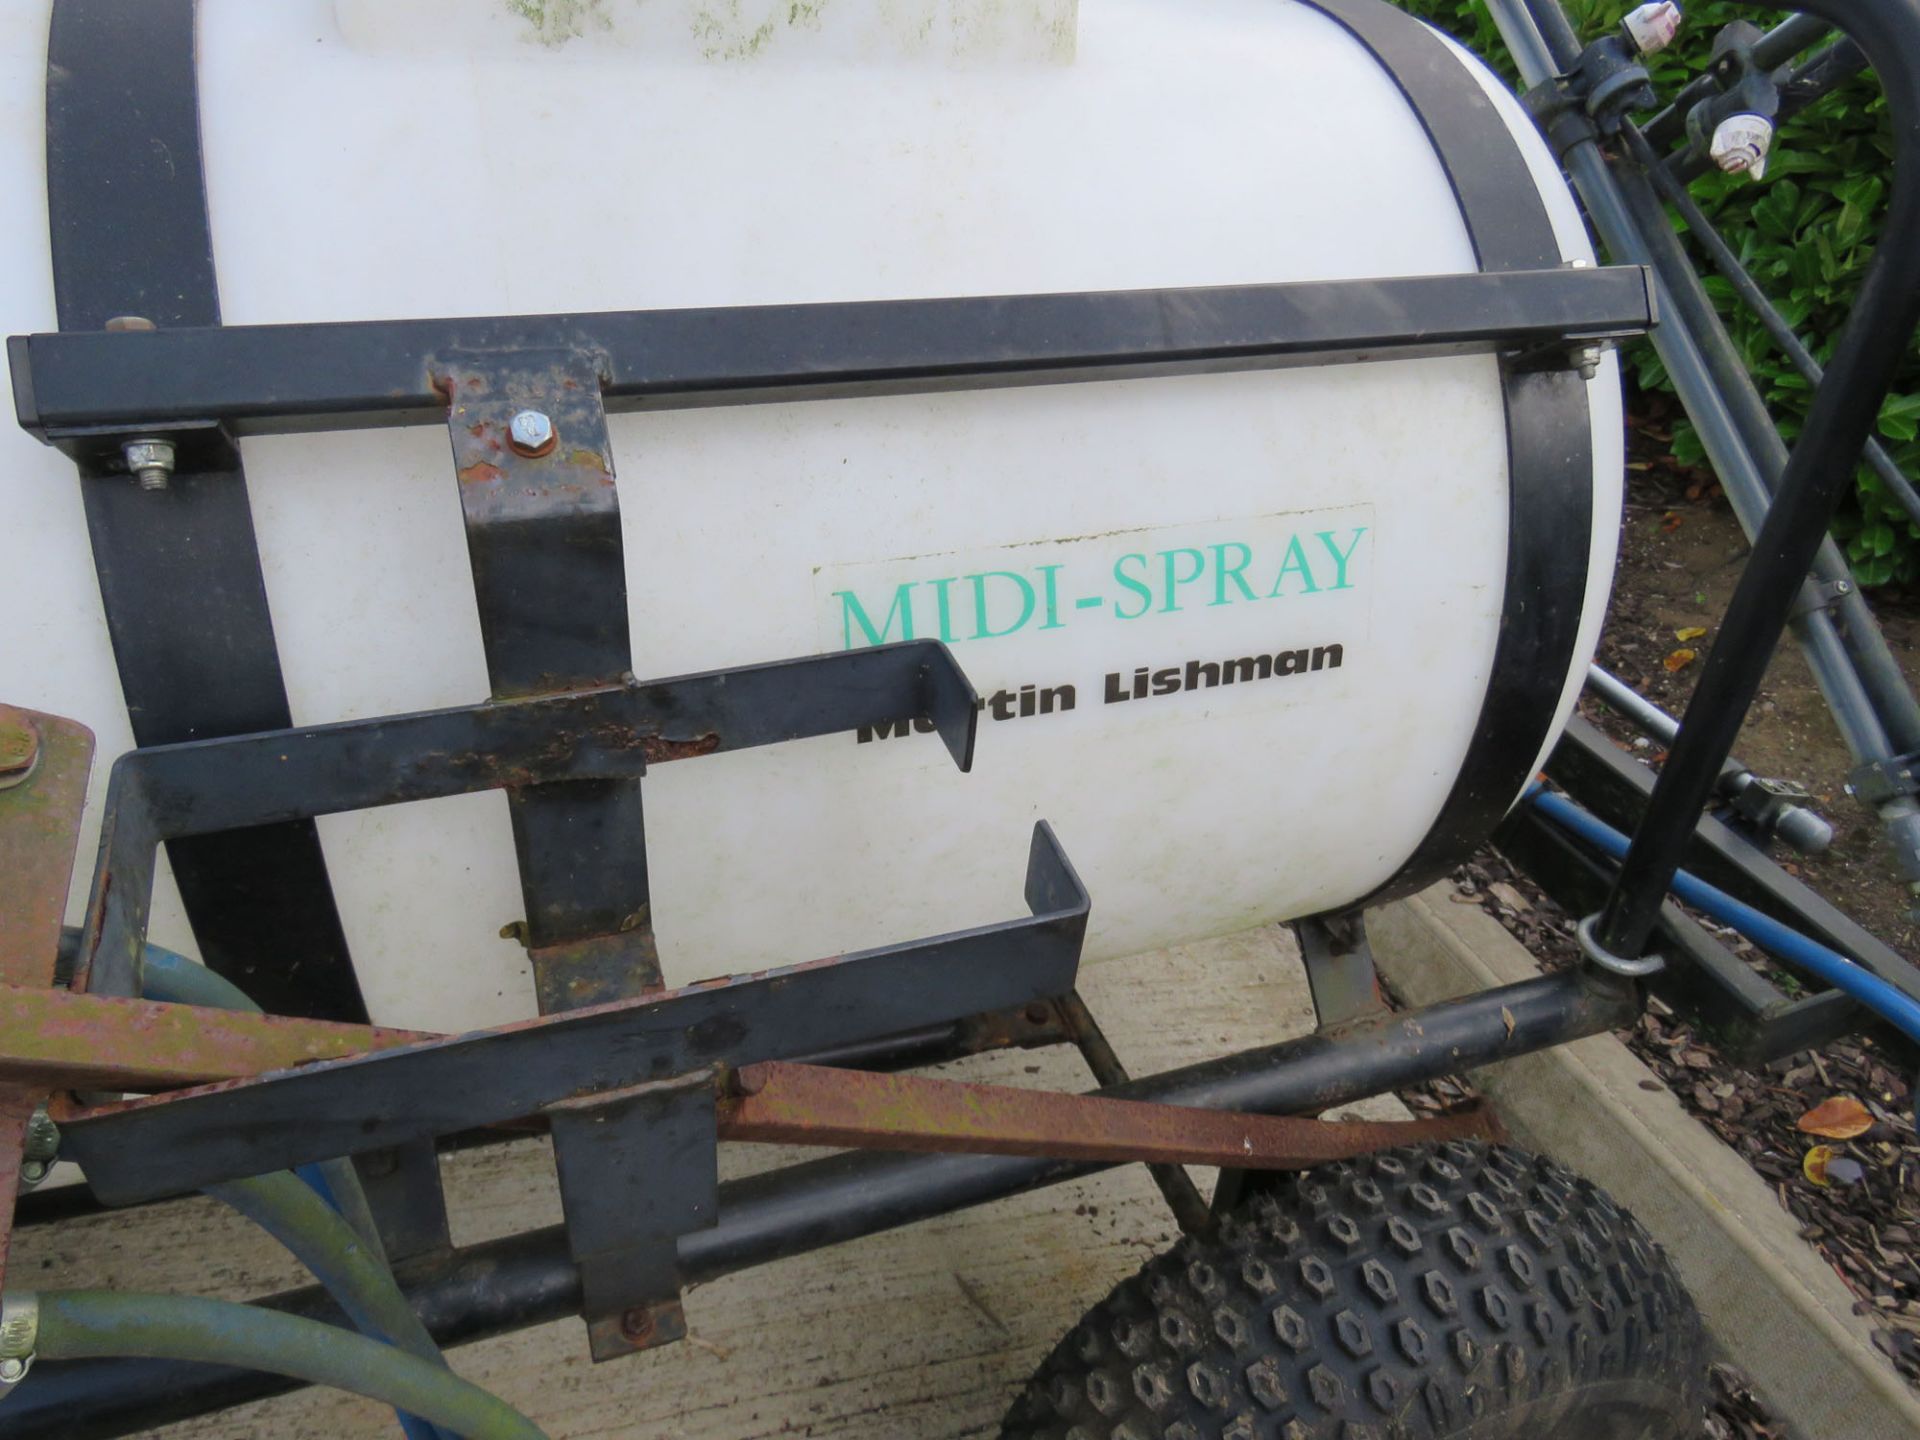 Midi spray martin lishman petrol powered portable spray bowser - Image 3 of 3